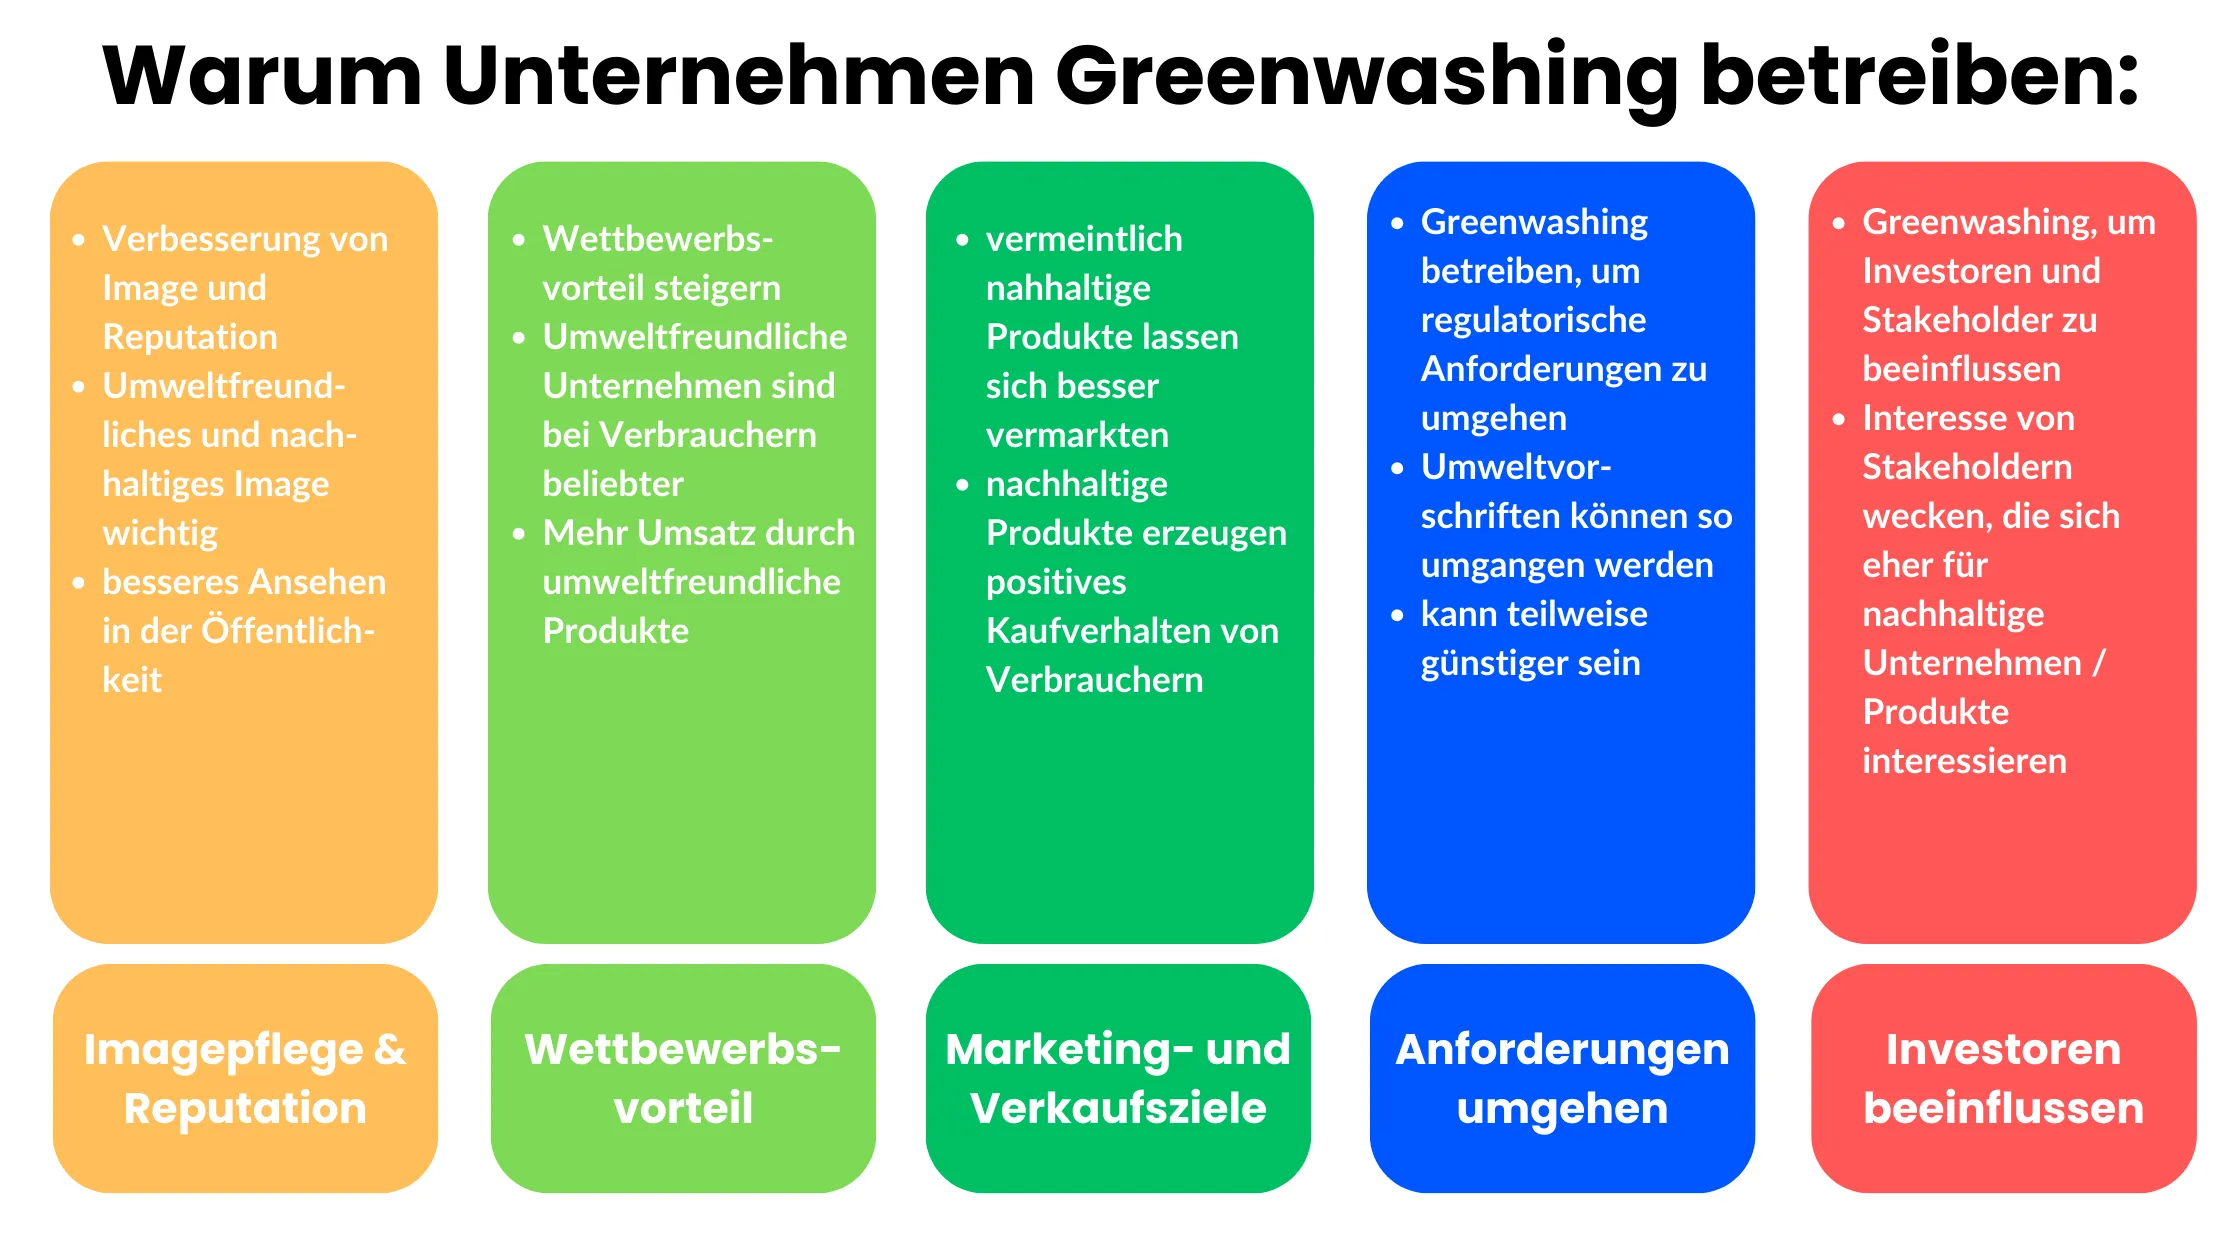 Gründe für Greenwashing